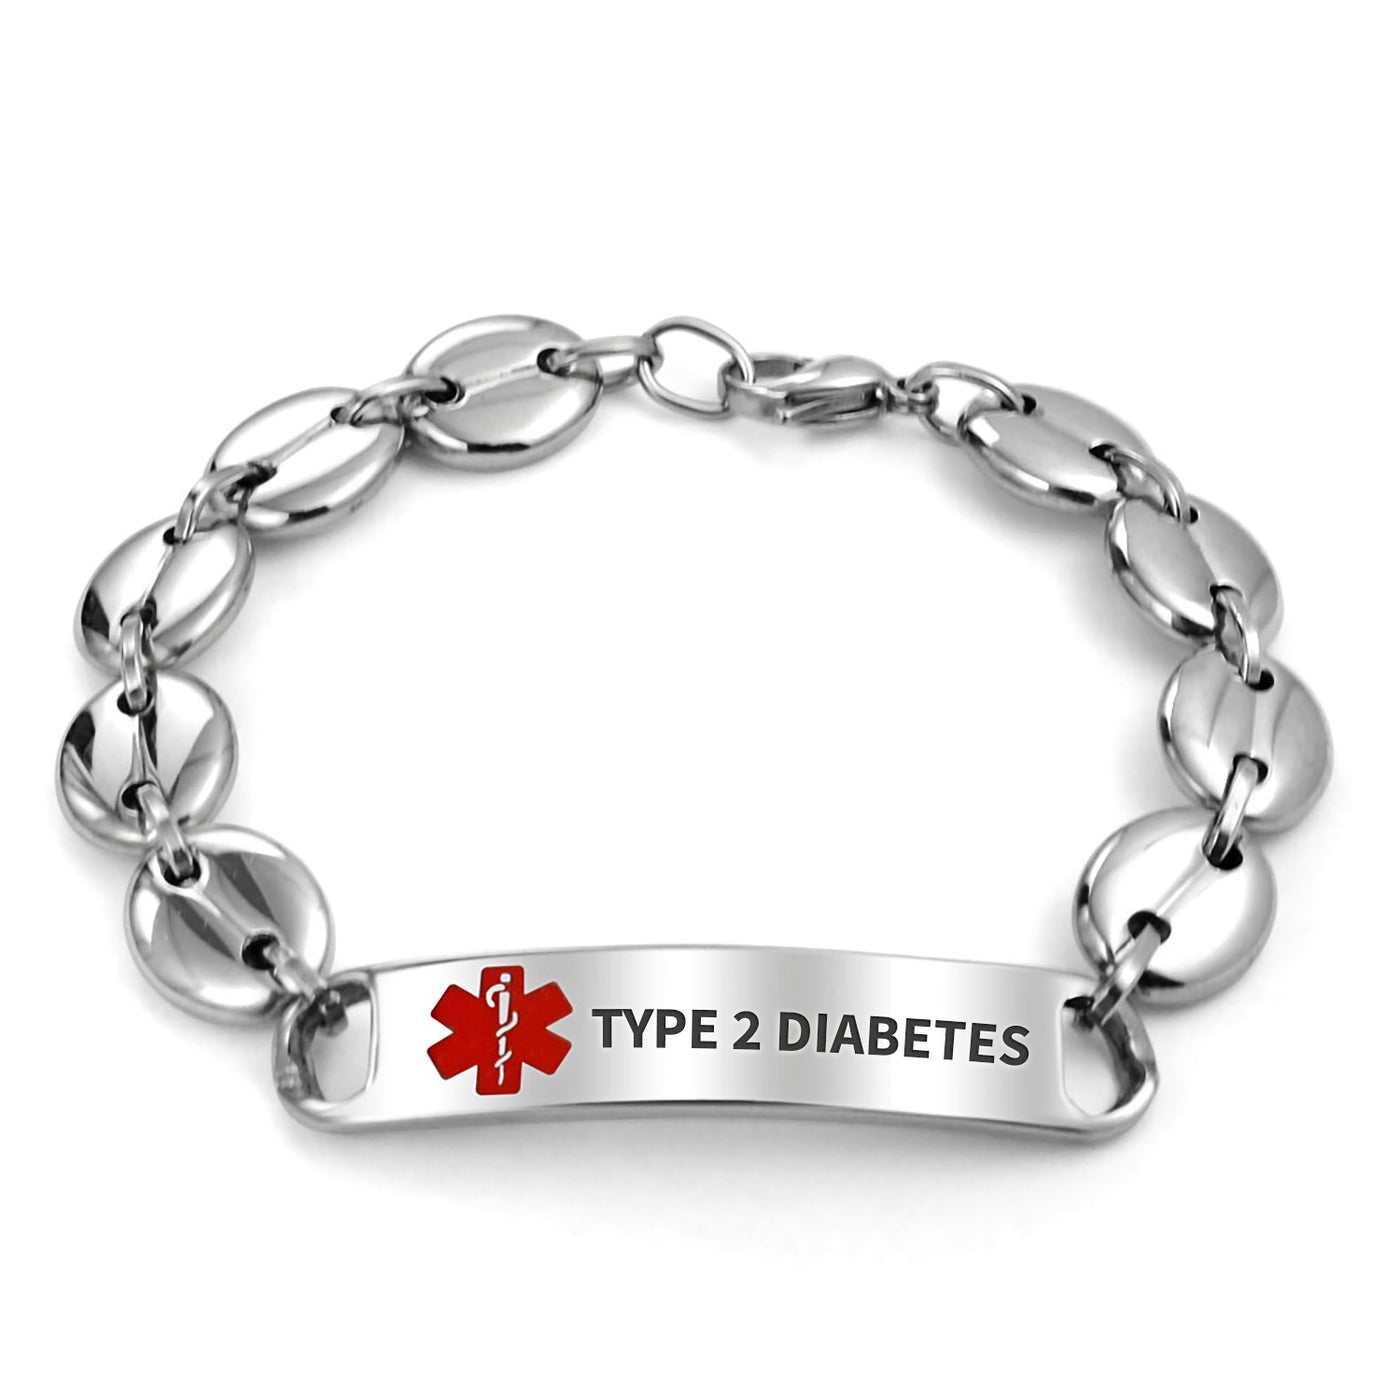 Type 2 diabetes | Image2